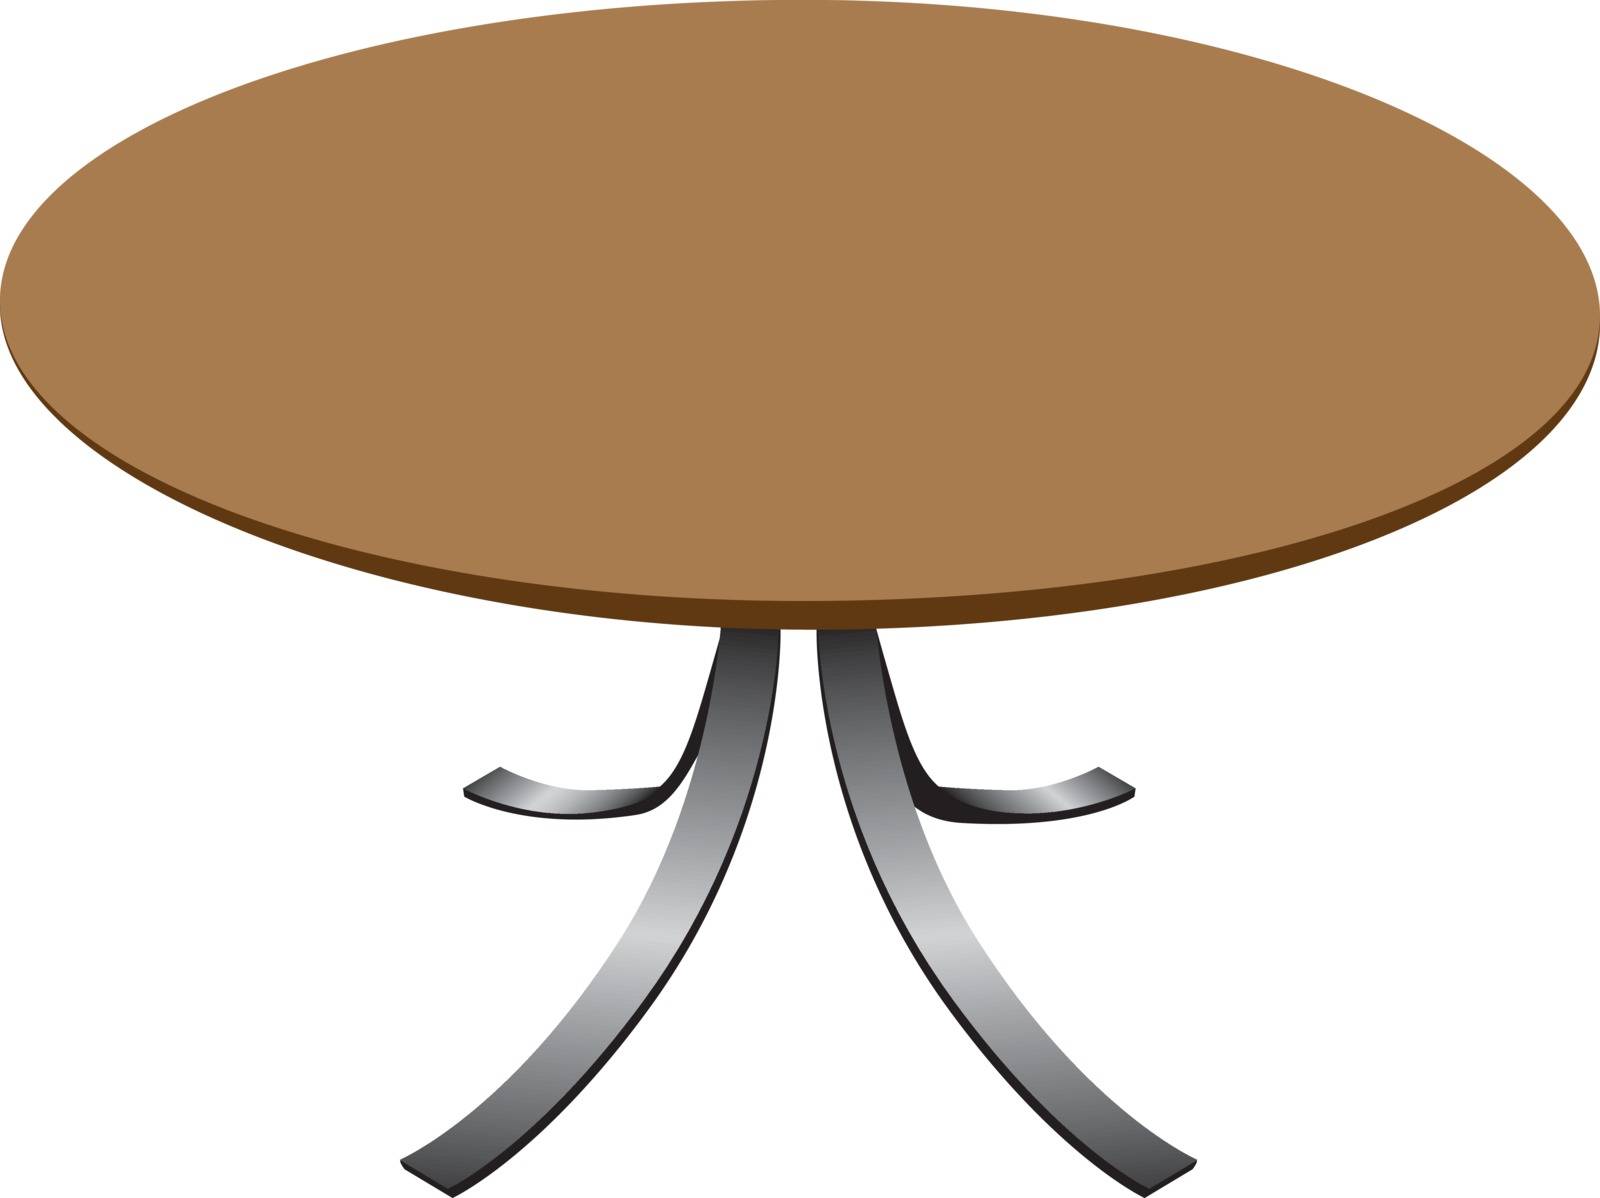 Round designer table by VIPDesignUSA